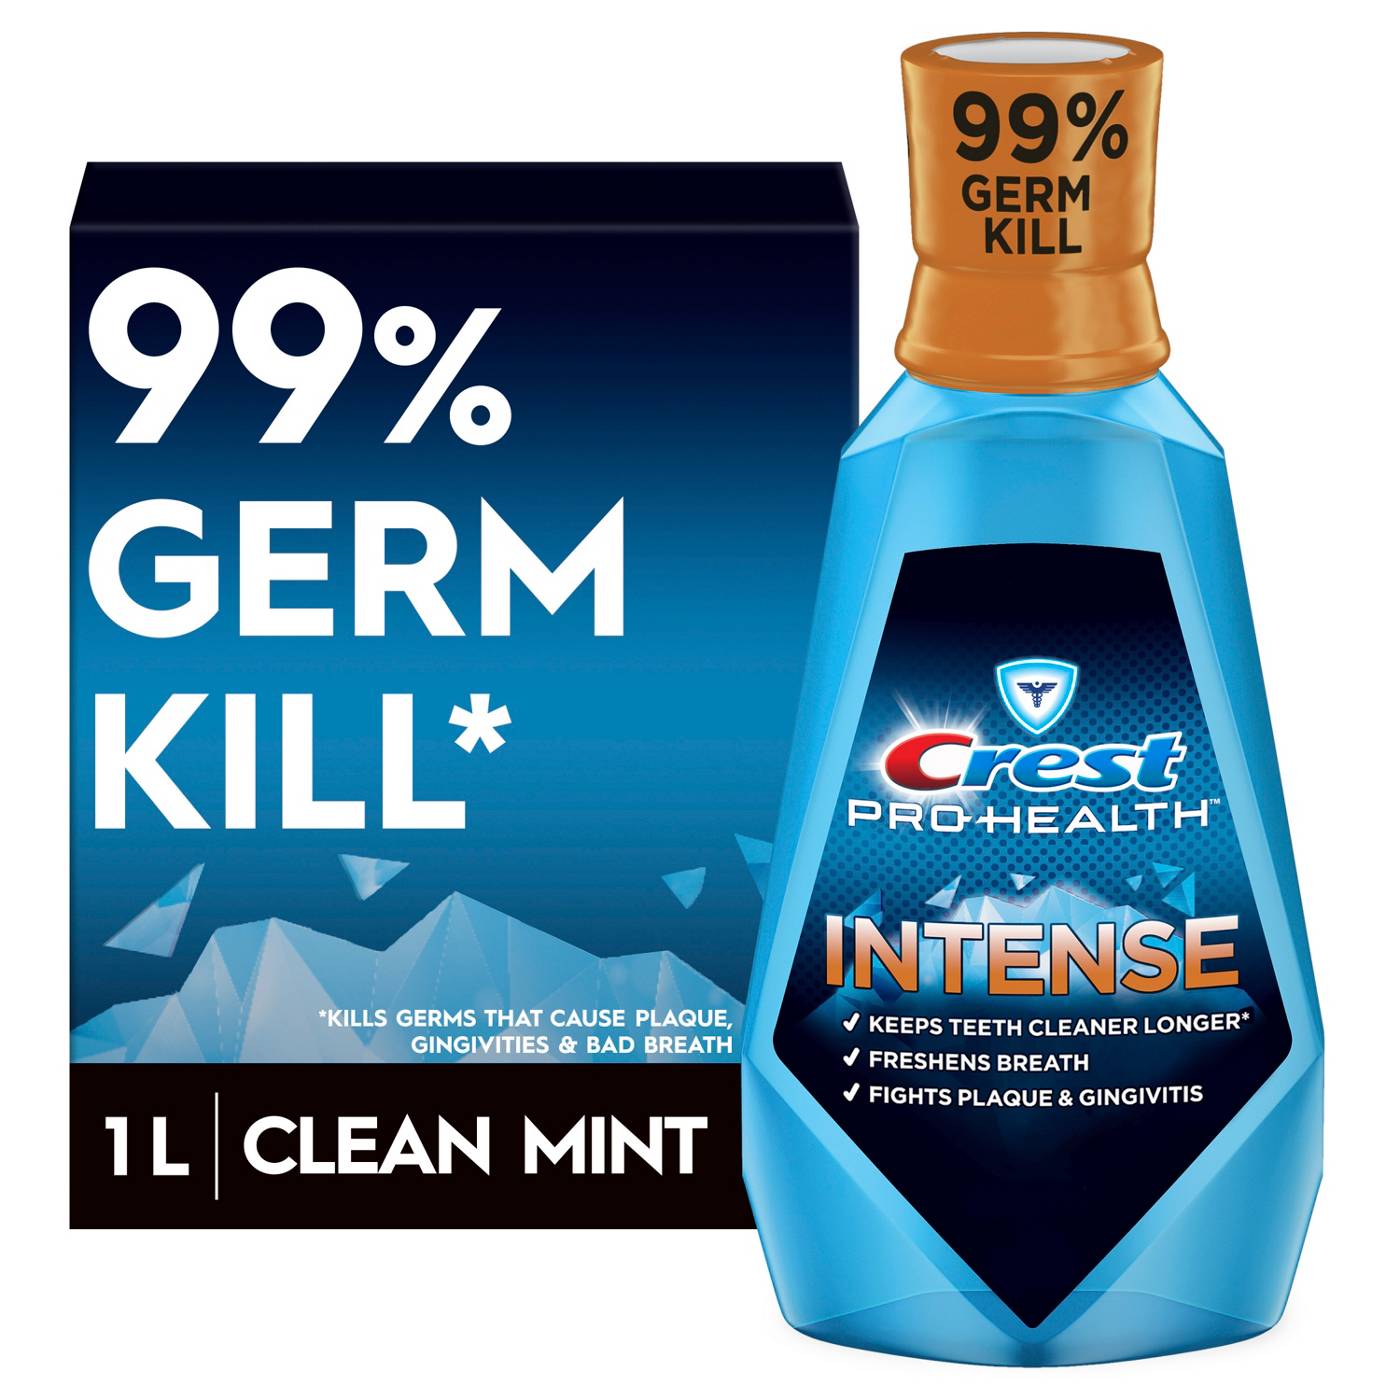 Crest Pro-Health Intense Mouthwash - Clean Mint; image 2 of 9